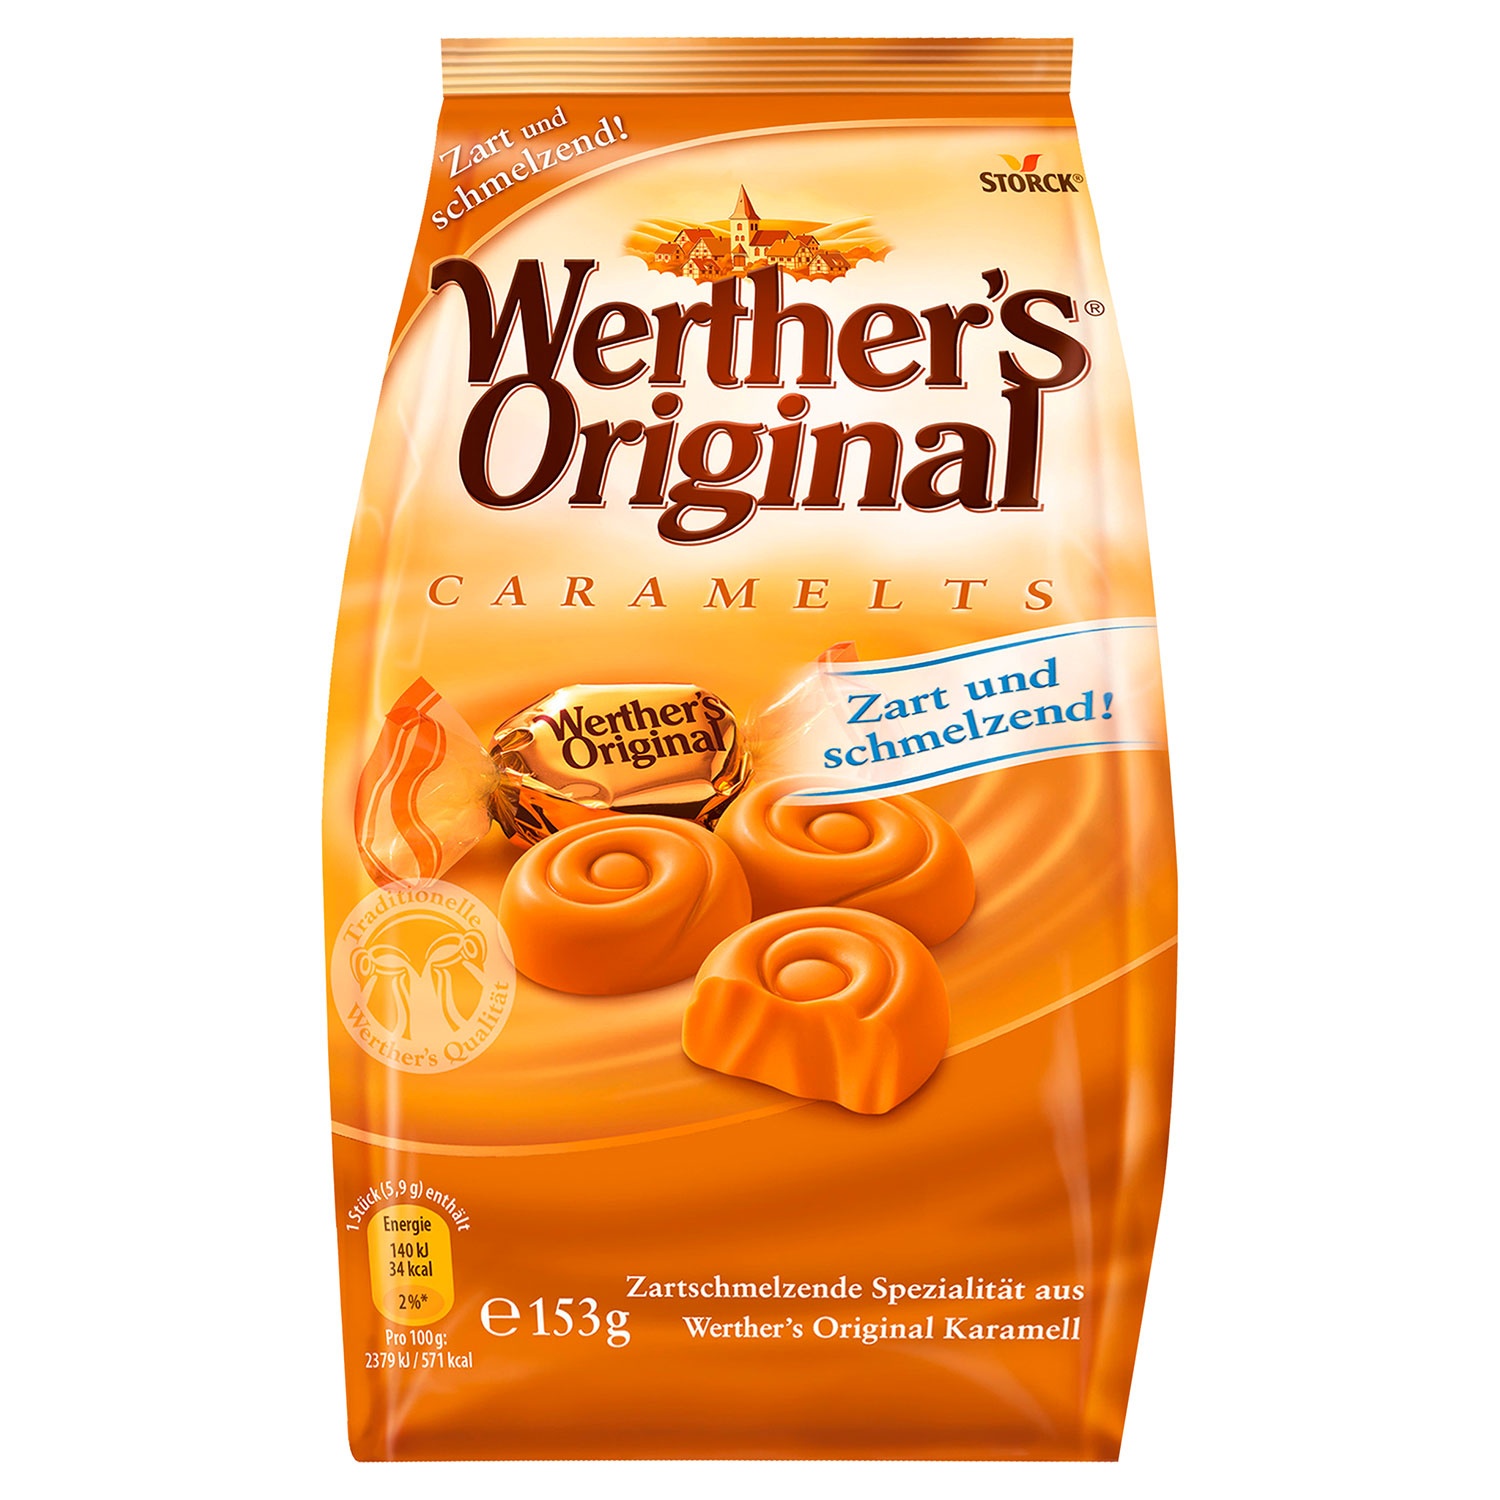 STORCK® Werther's Original Caramel Bites 140 g